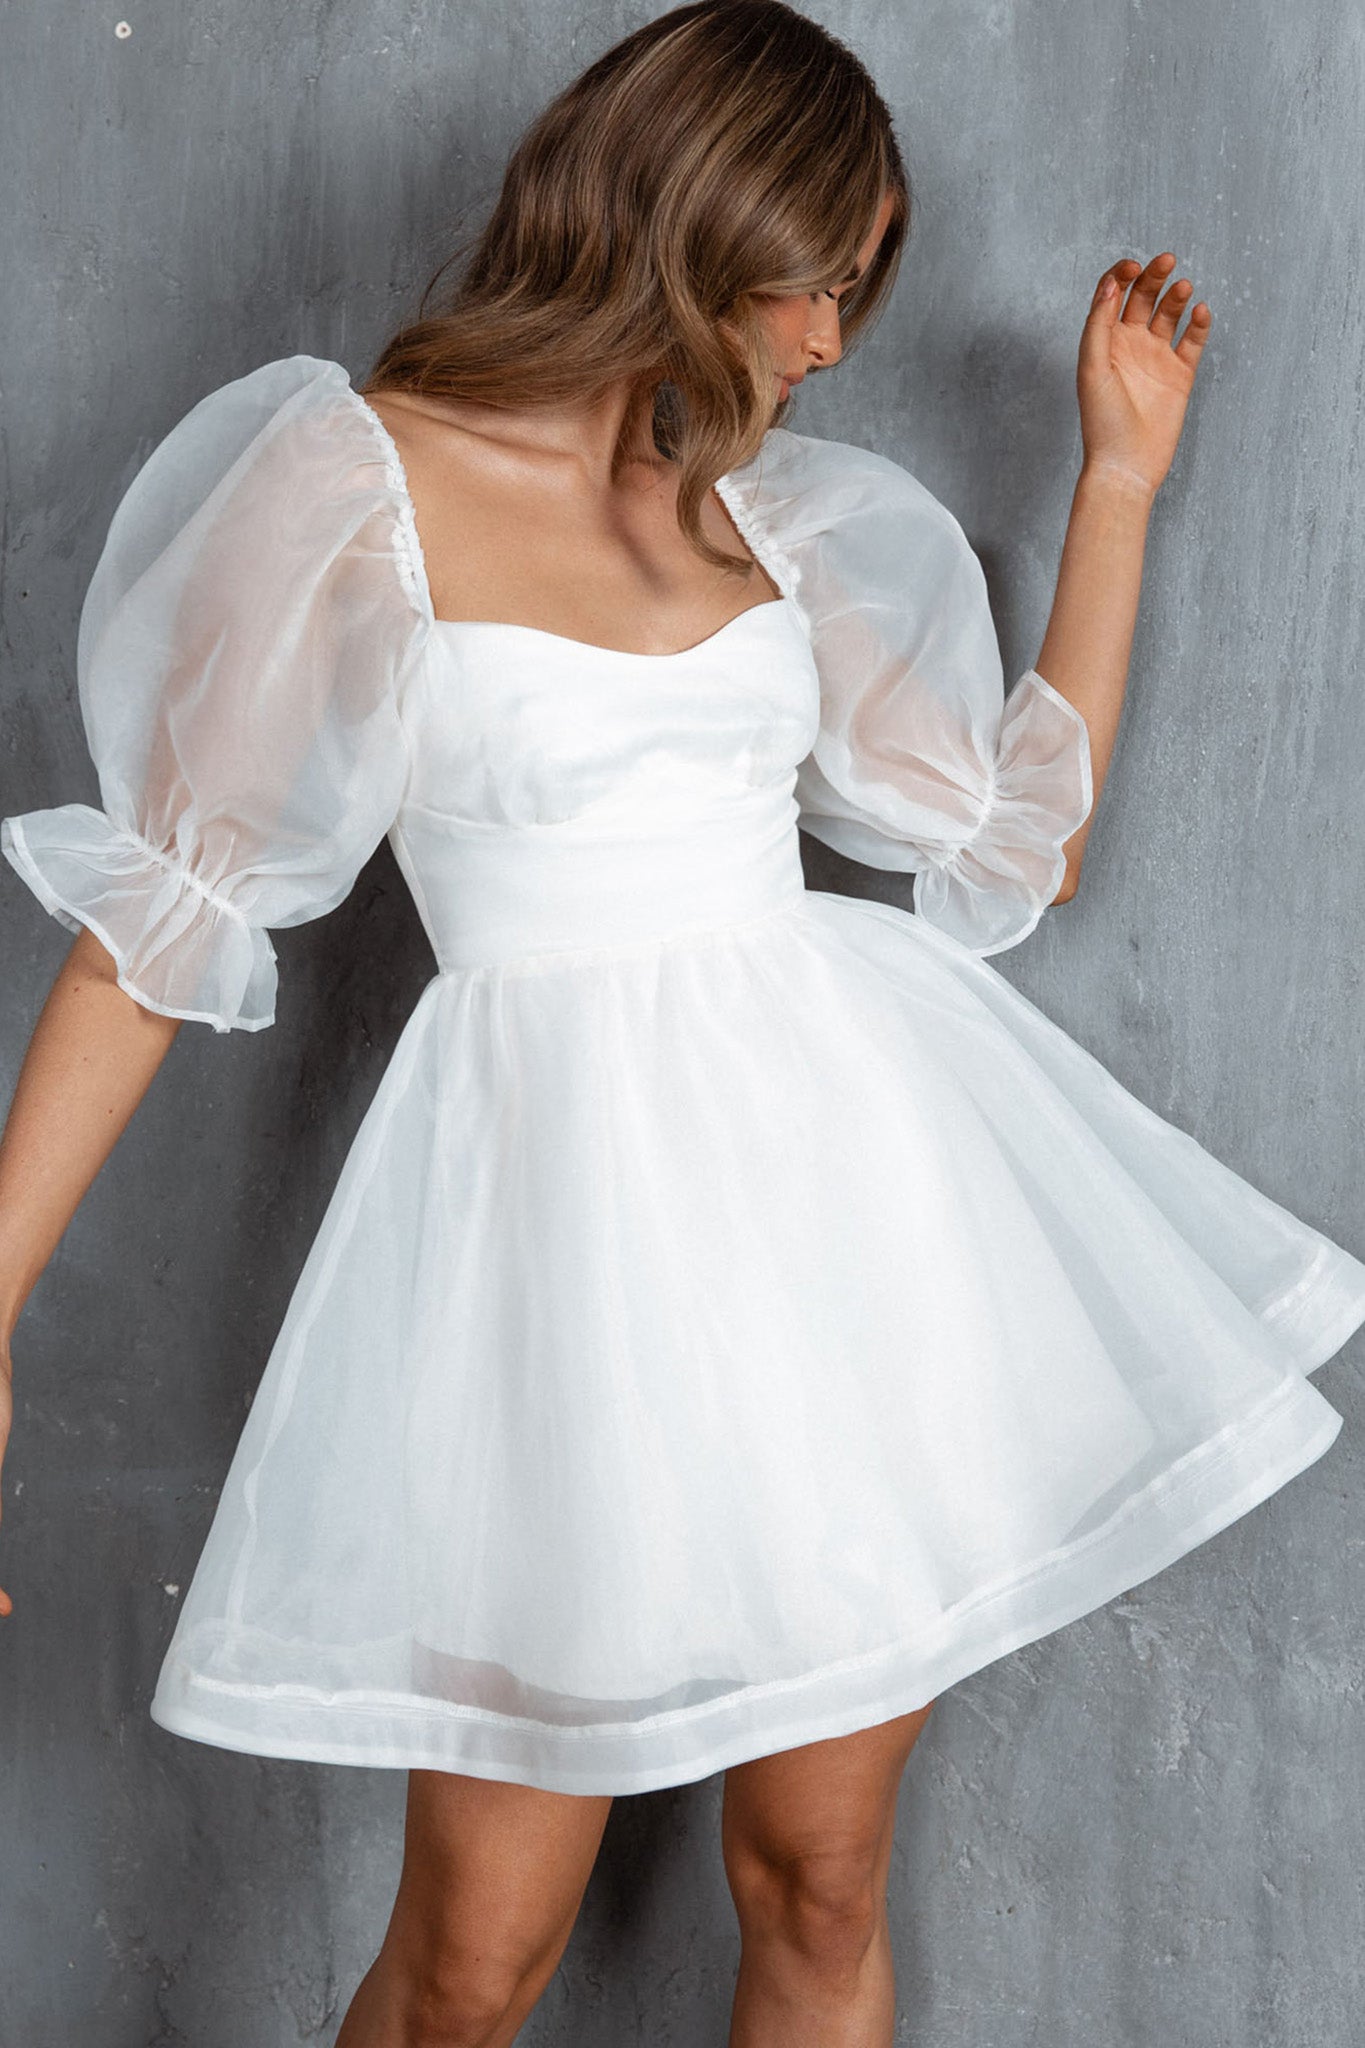 puffy white dress